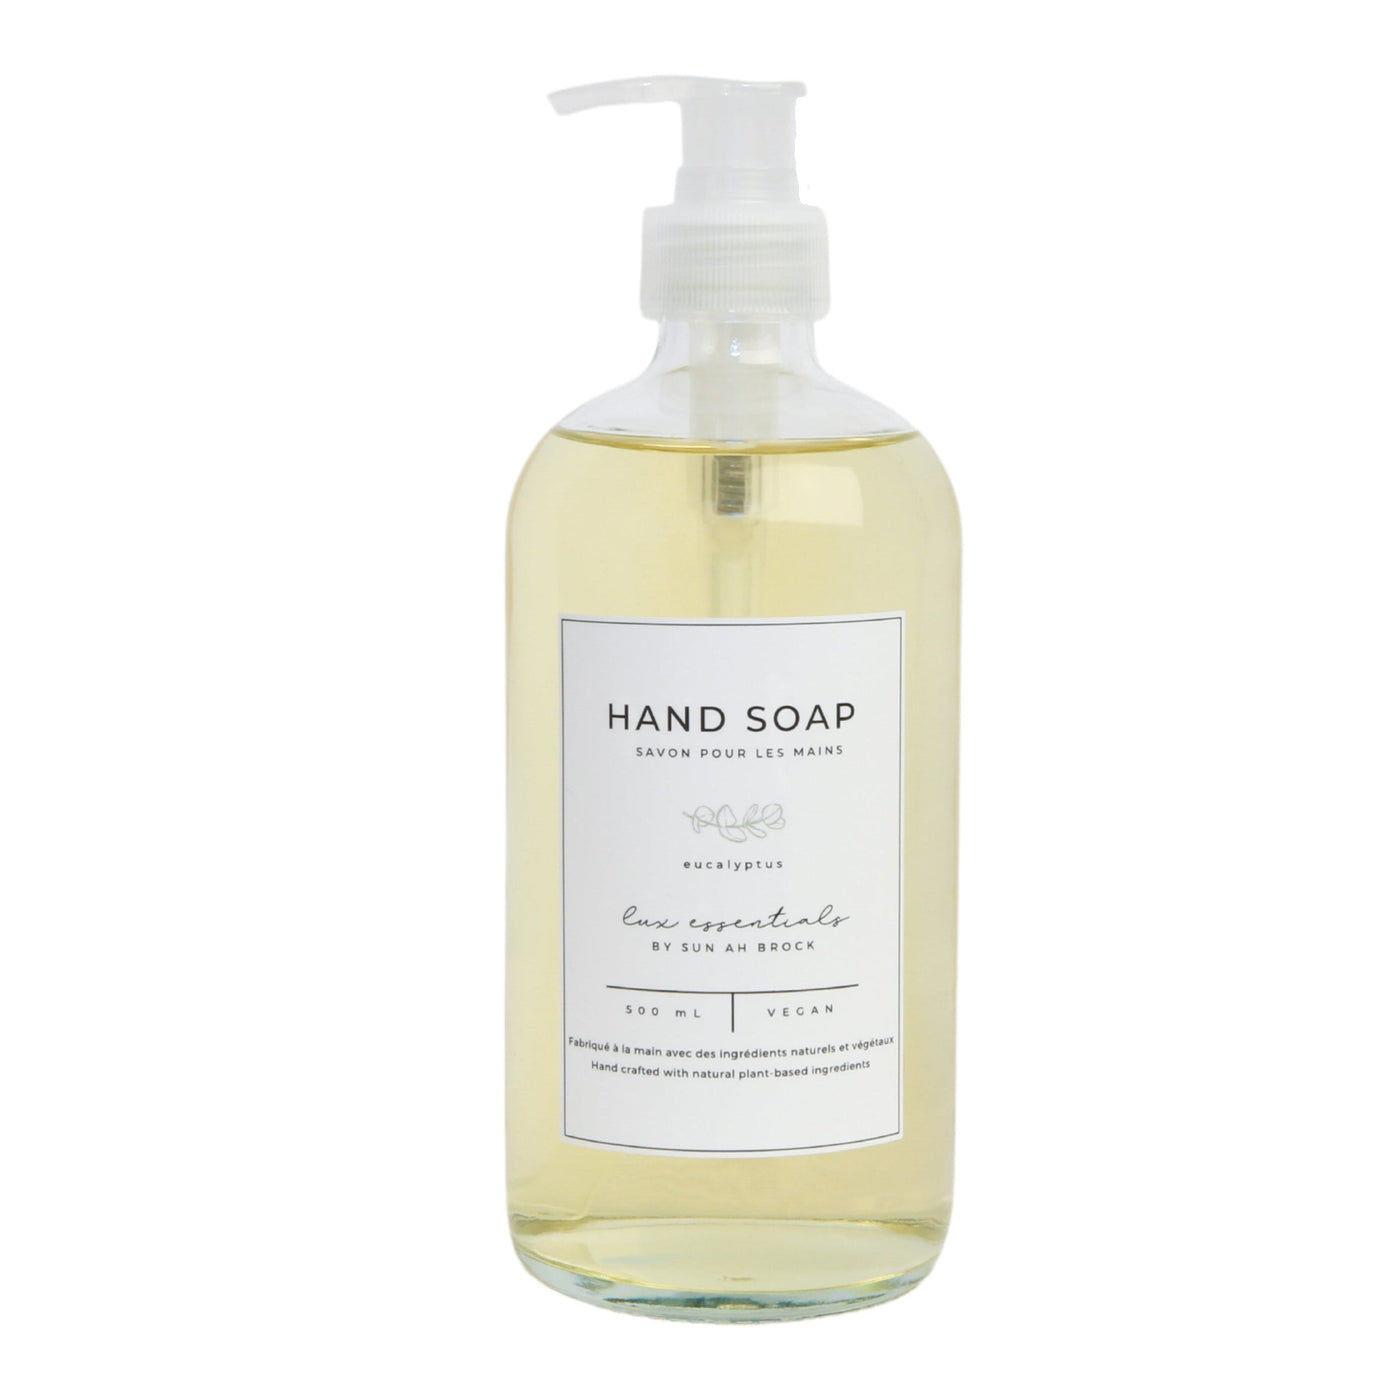 LUX essentials Eucalyptus Hand Soap